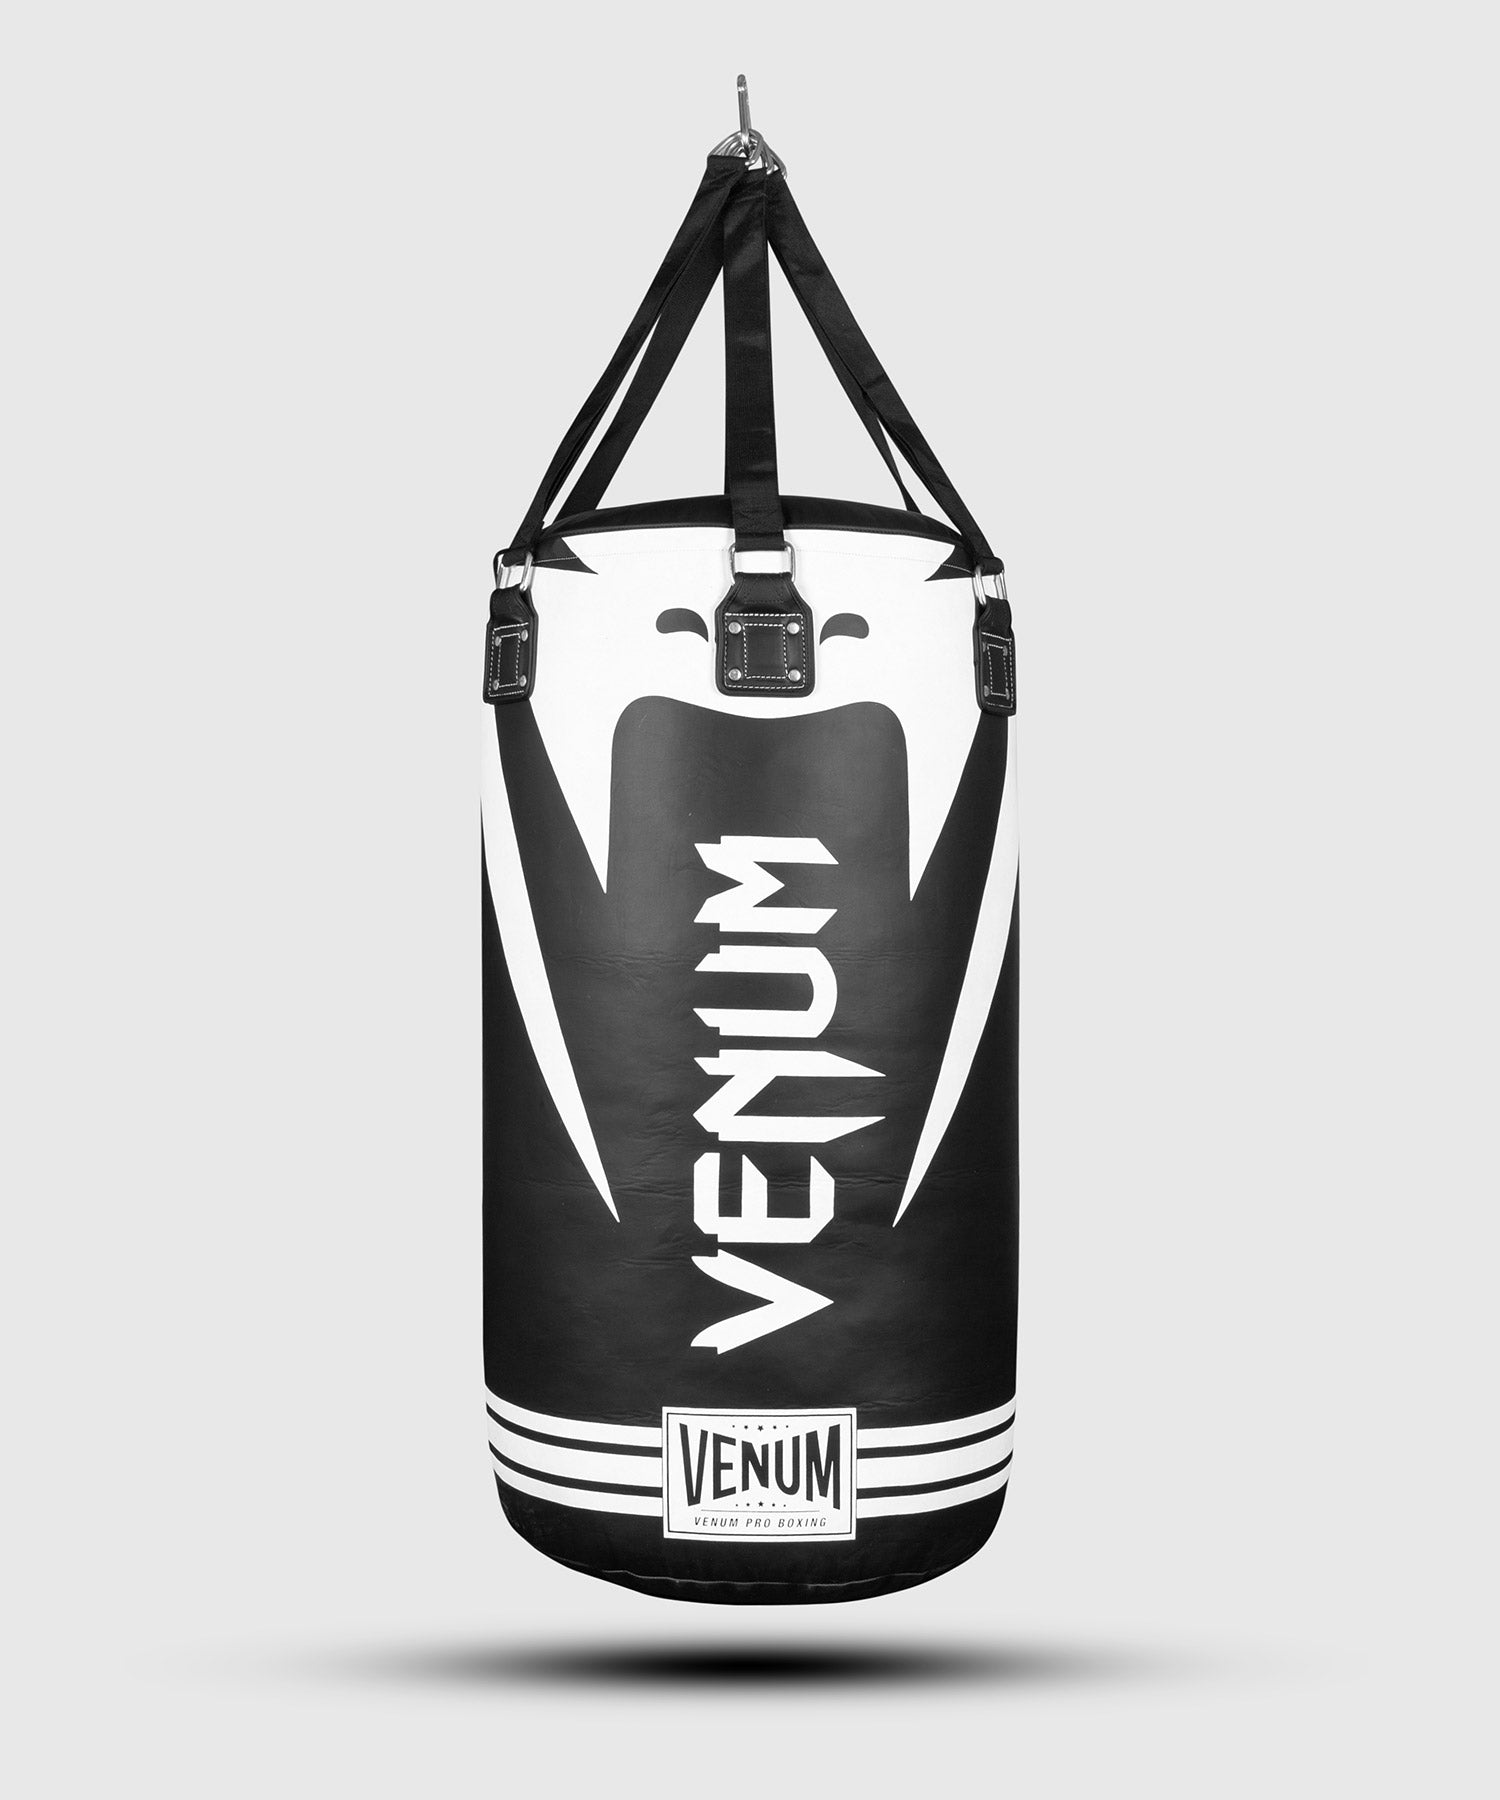 Venum Classic Boxing punching Bag - 70lbs - Black/White - Heavy